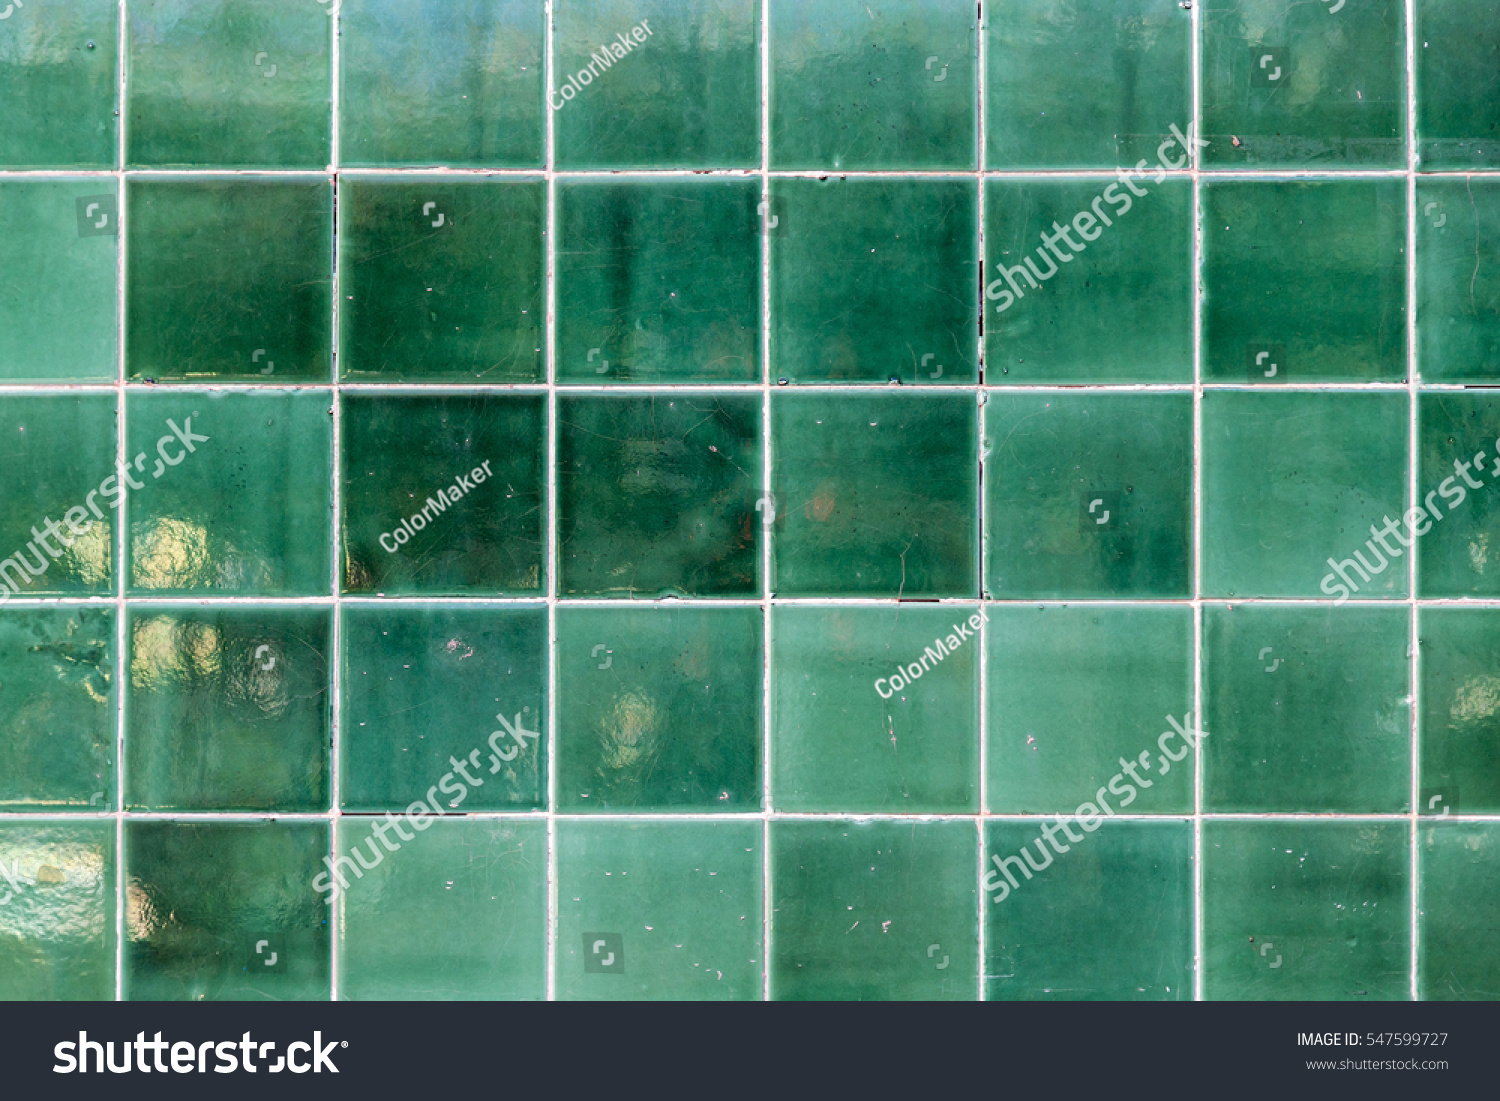 34,410 Teal tiles Images, Stock Photos & Vectors | Shutterstock